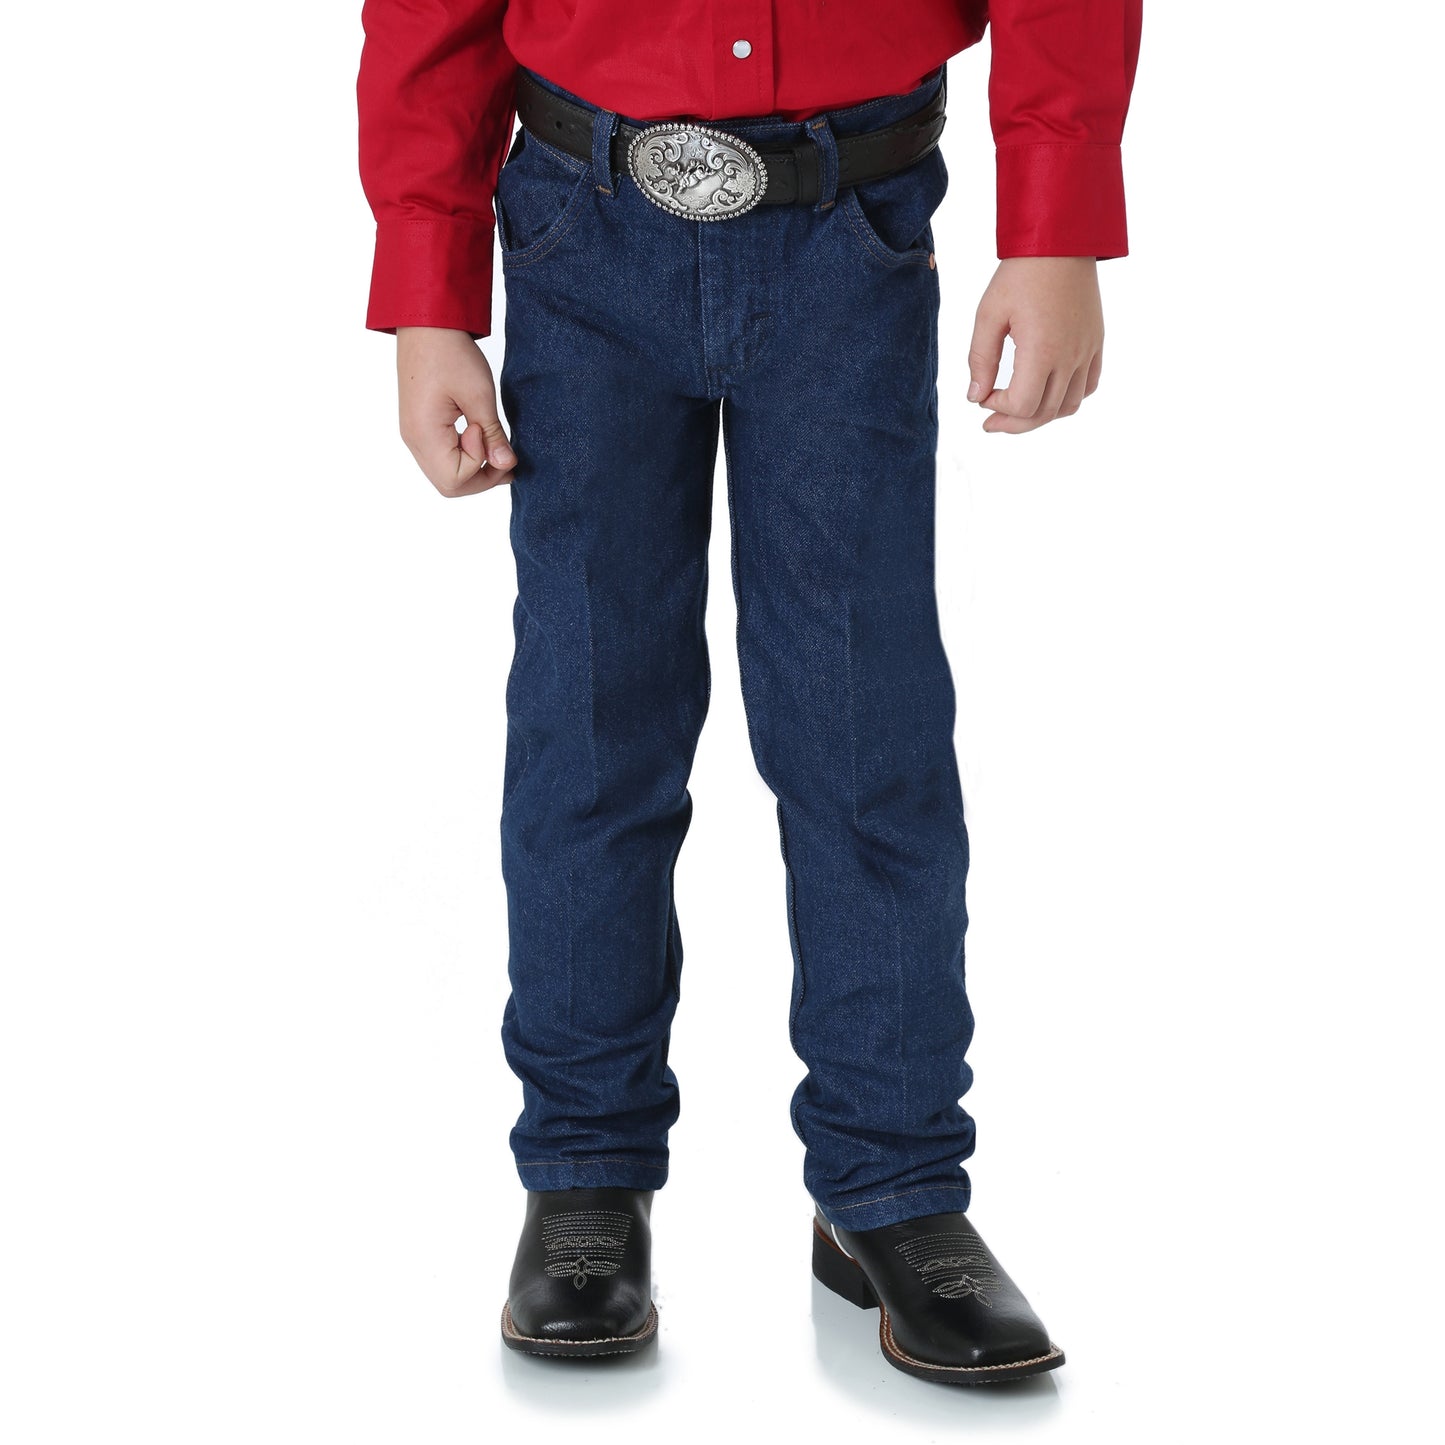 Wrangler Cowboy Cut Jeans Toddler Boys - Prewashed Indigo